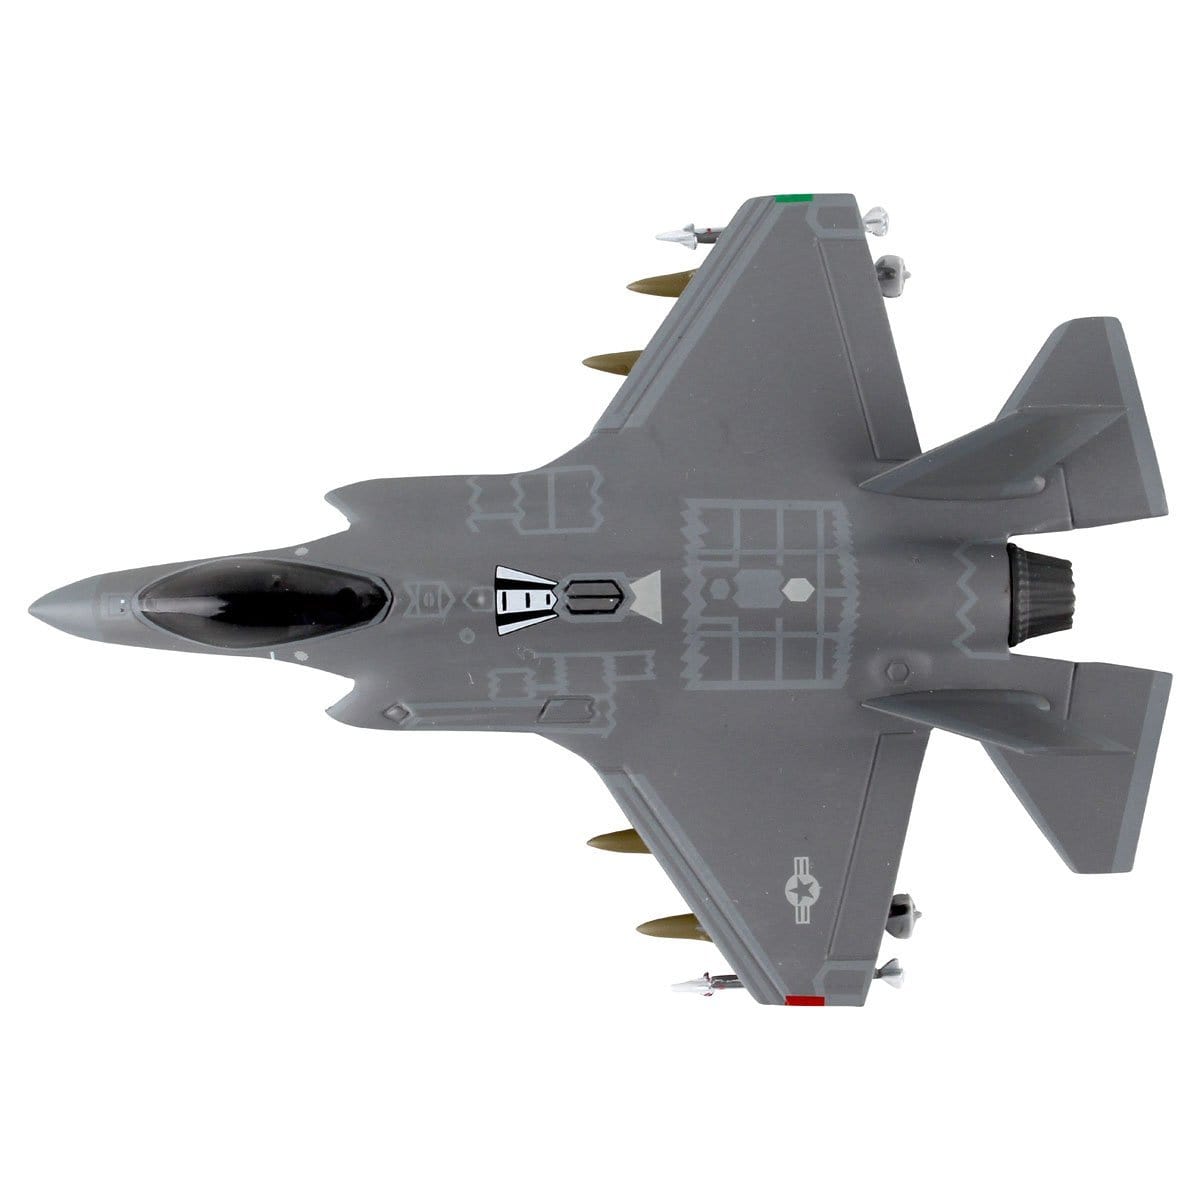 F-35(A) Lightning II 58th FS 1/144 Scale Postage Stamp Die-cast Model - PilotMall.com